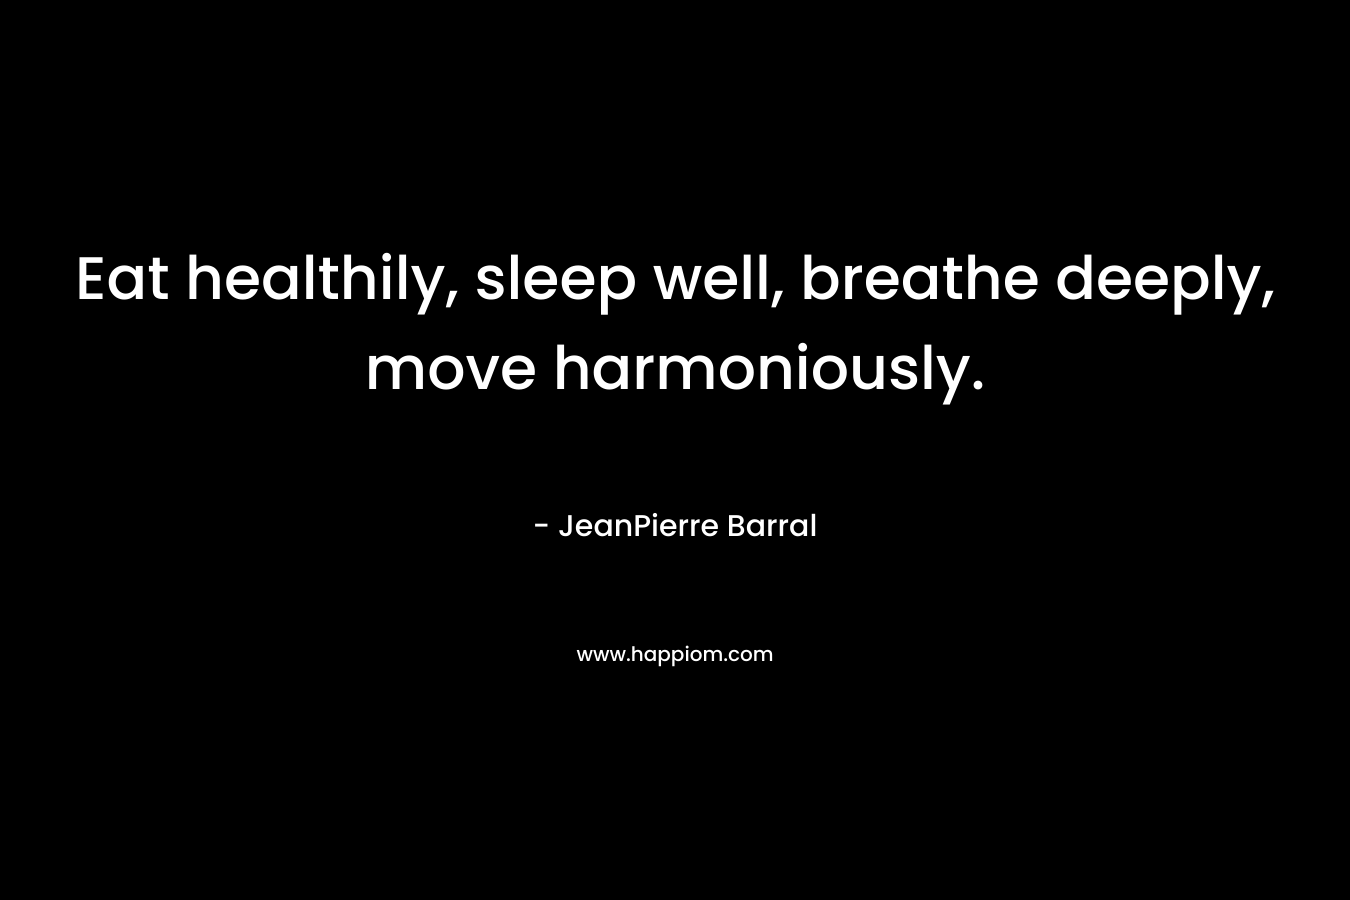 Eat healthily, sleep well, breathe deeply, move harmoniously.